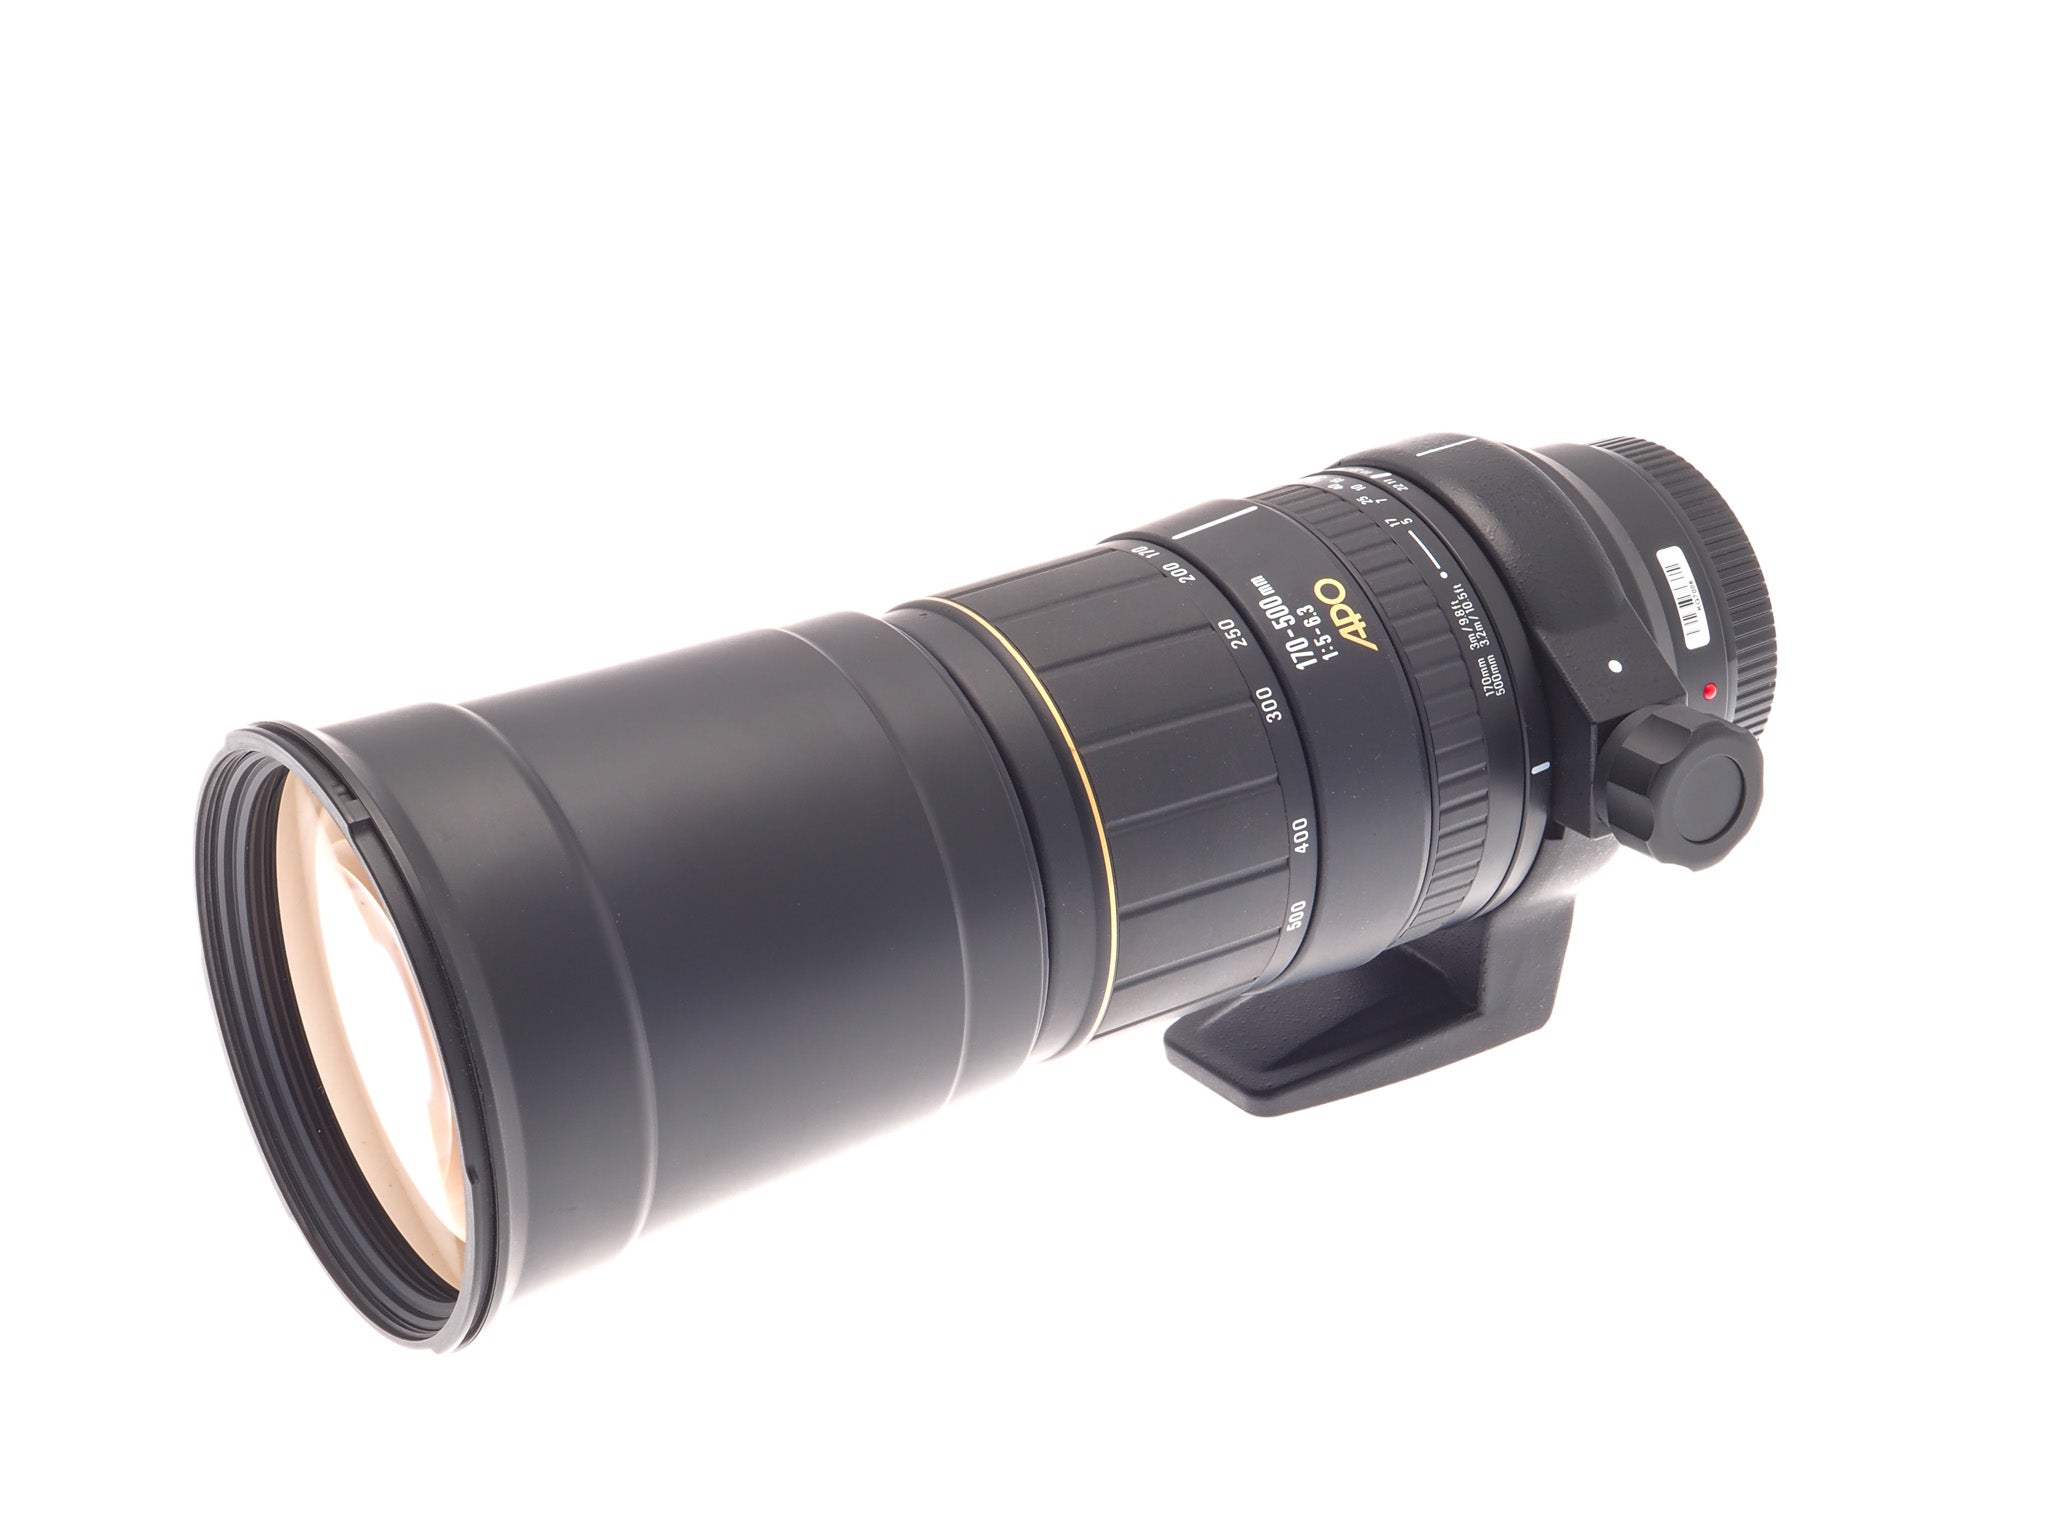 APO SIGMA 170-500mm f 5-6.3 DG CANON - レンズ(ズーム)